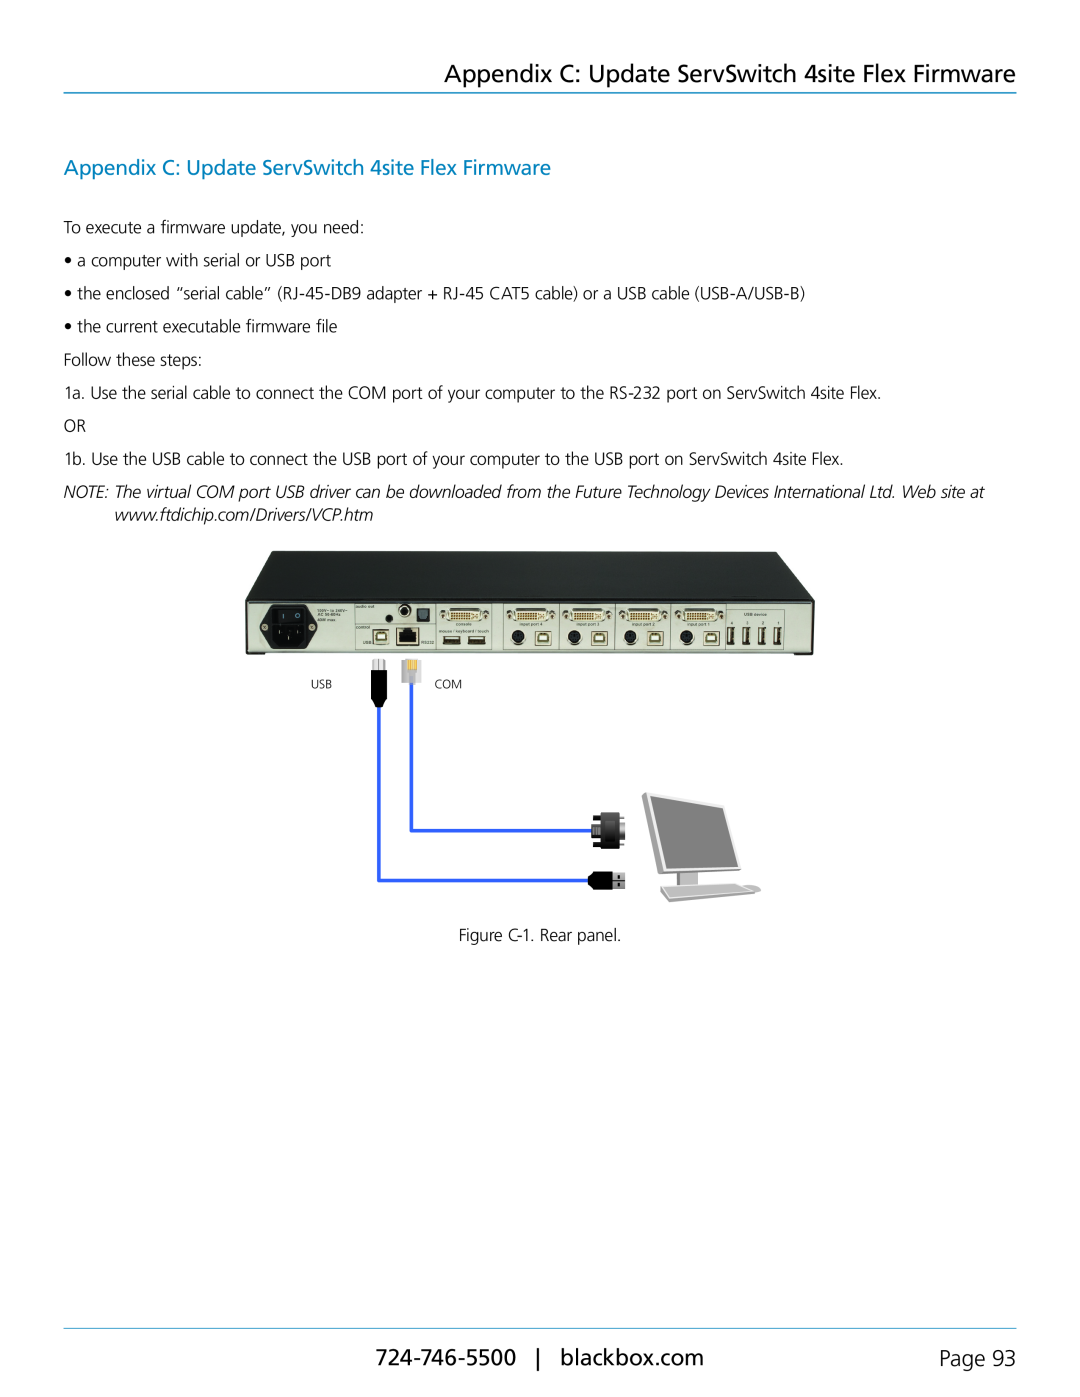 Black Box servswitch 4site flex, KVP40004A manual Appendix C Update ServSwitch 4site Flex Firmware, Page 